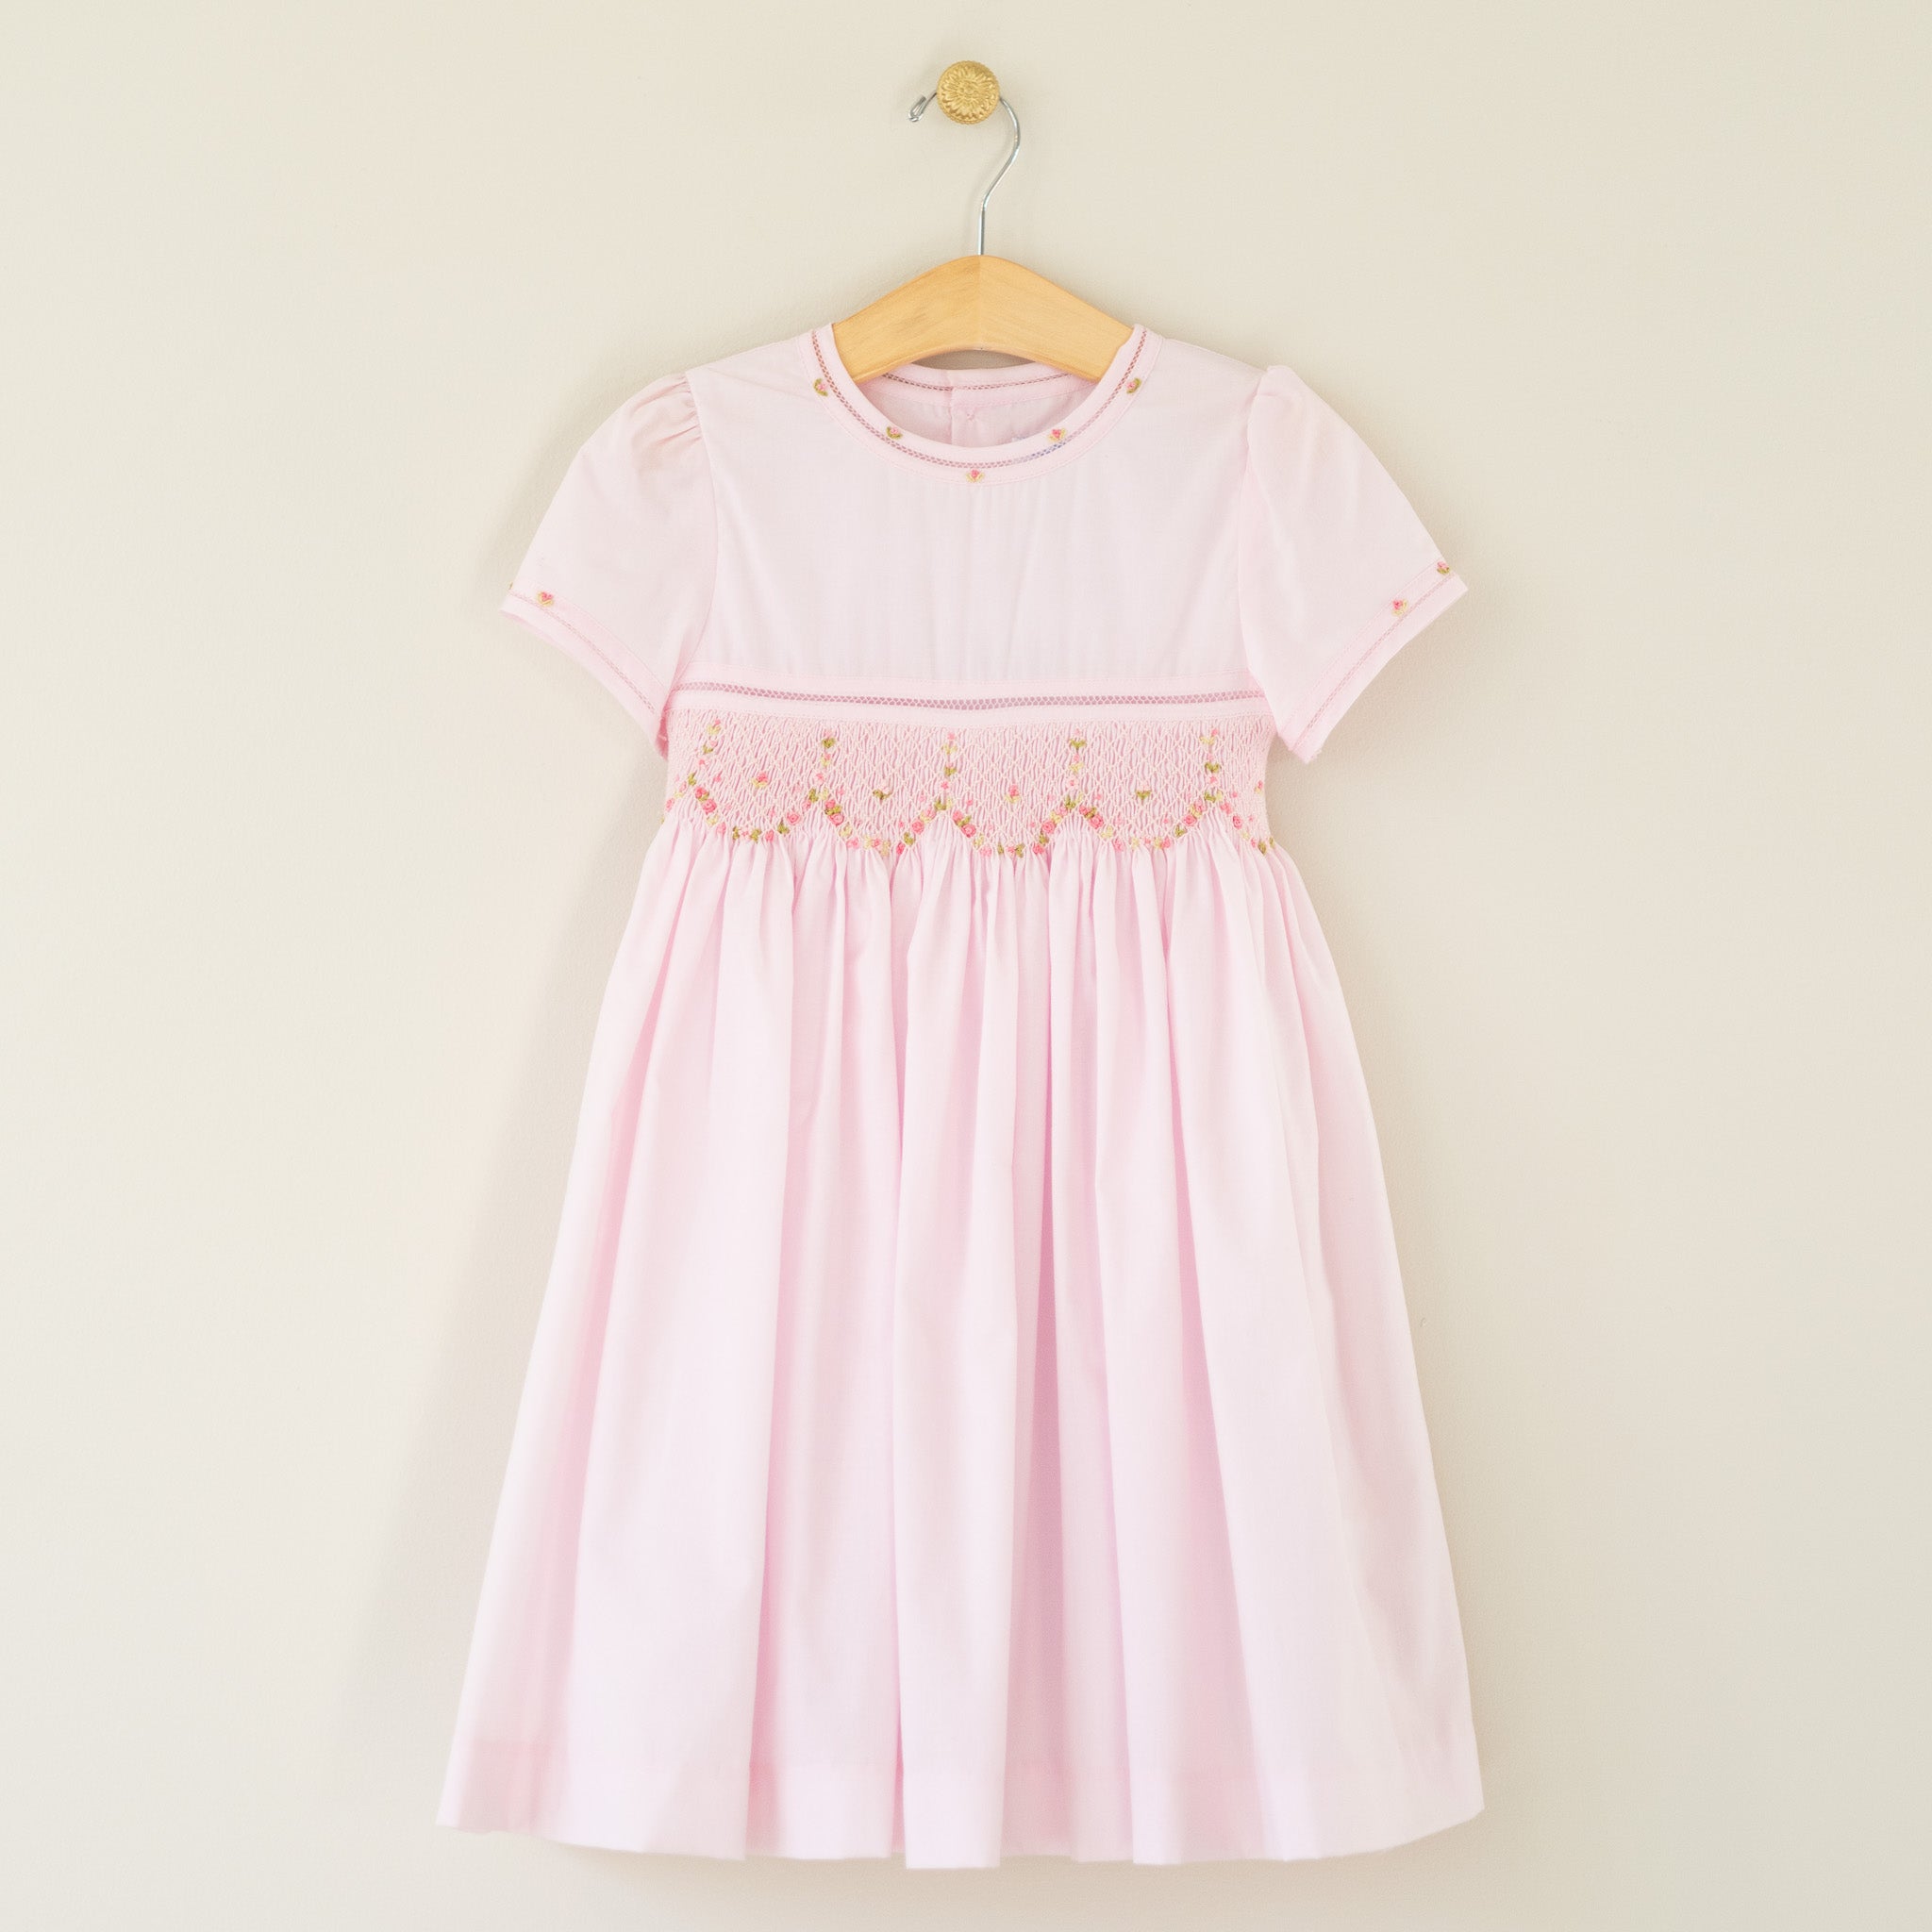 Solid Pink Smocked Dress